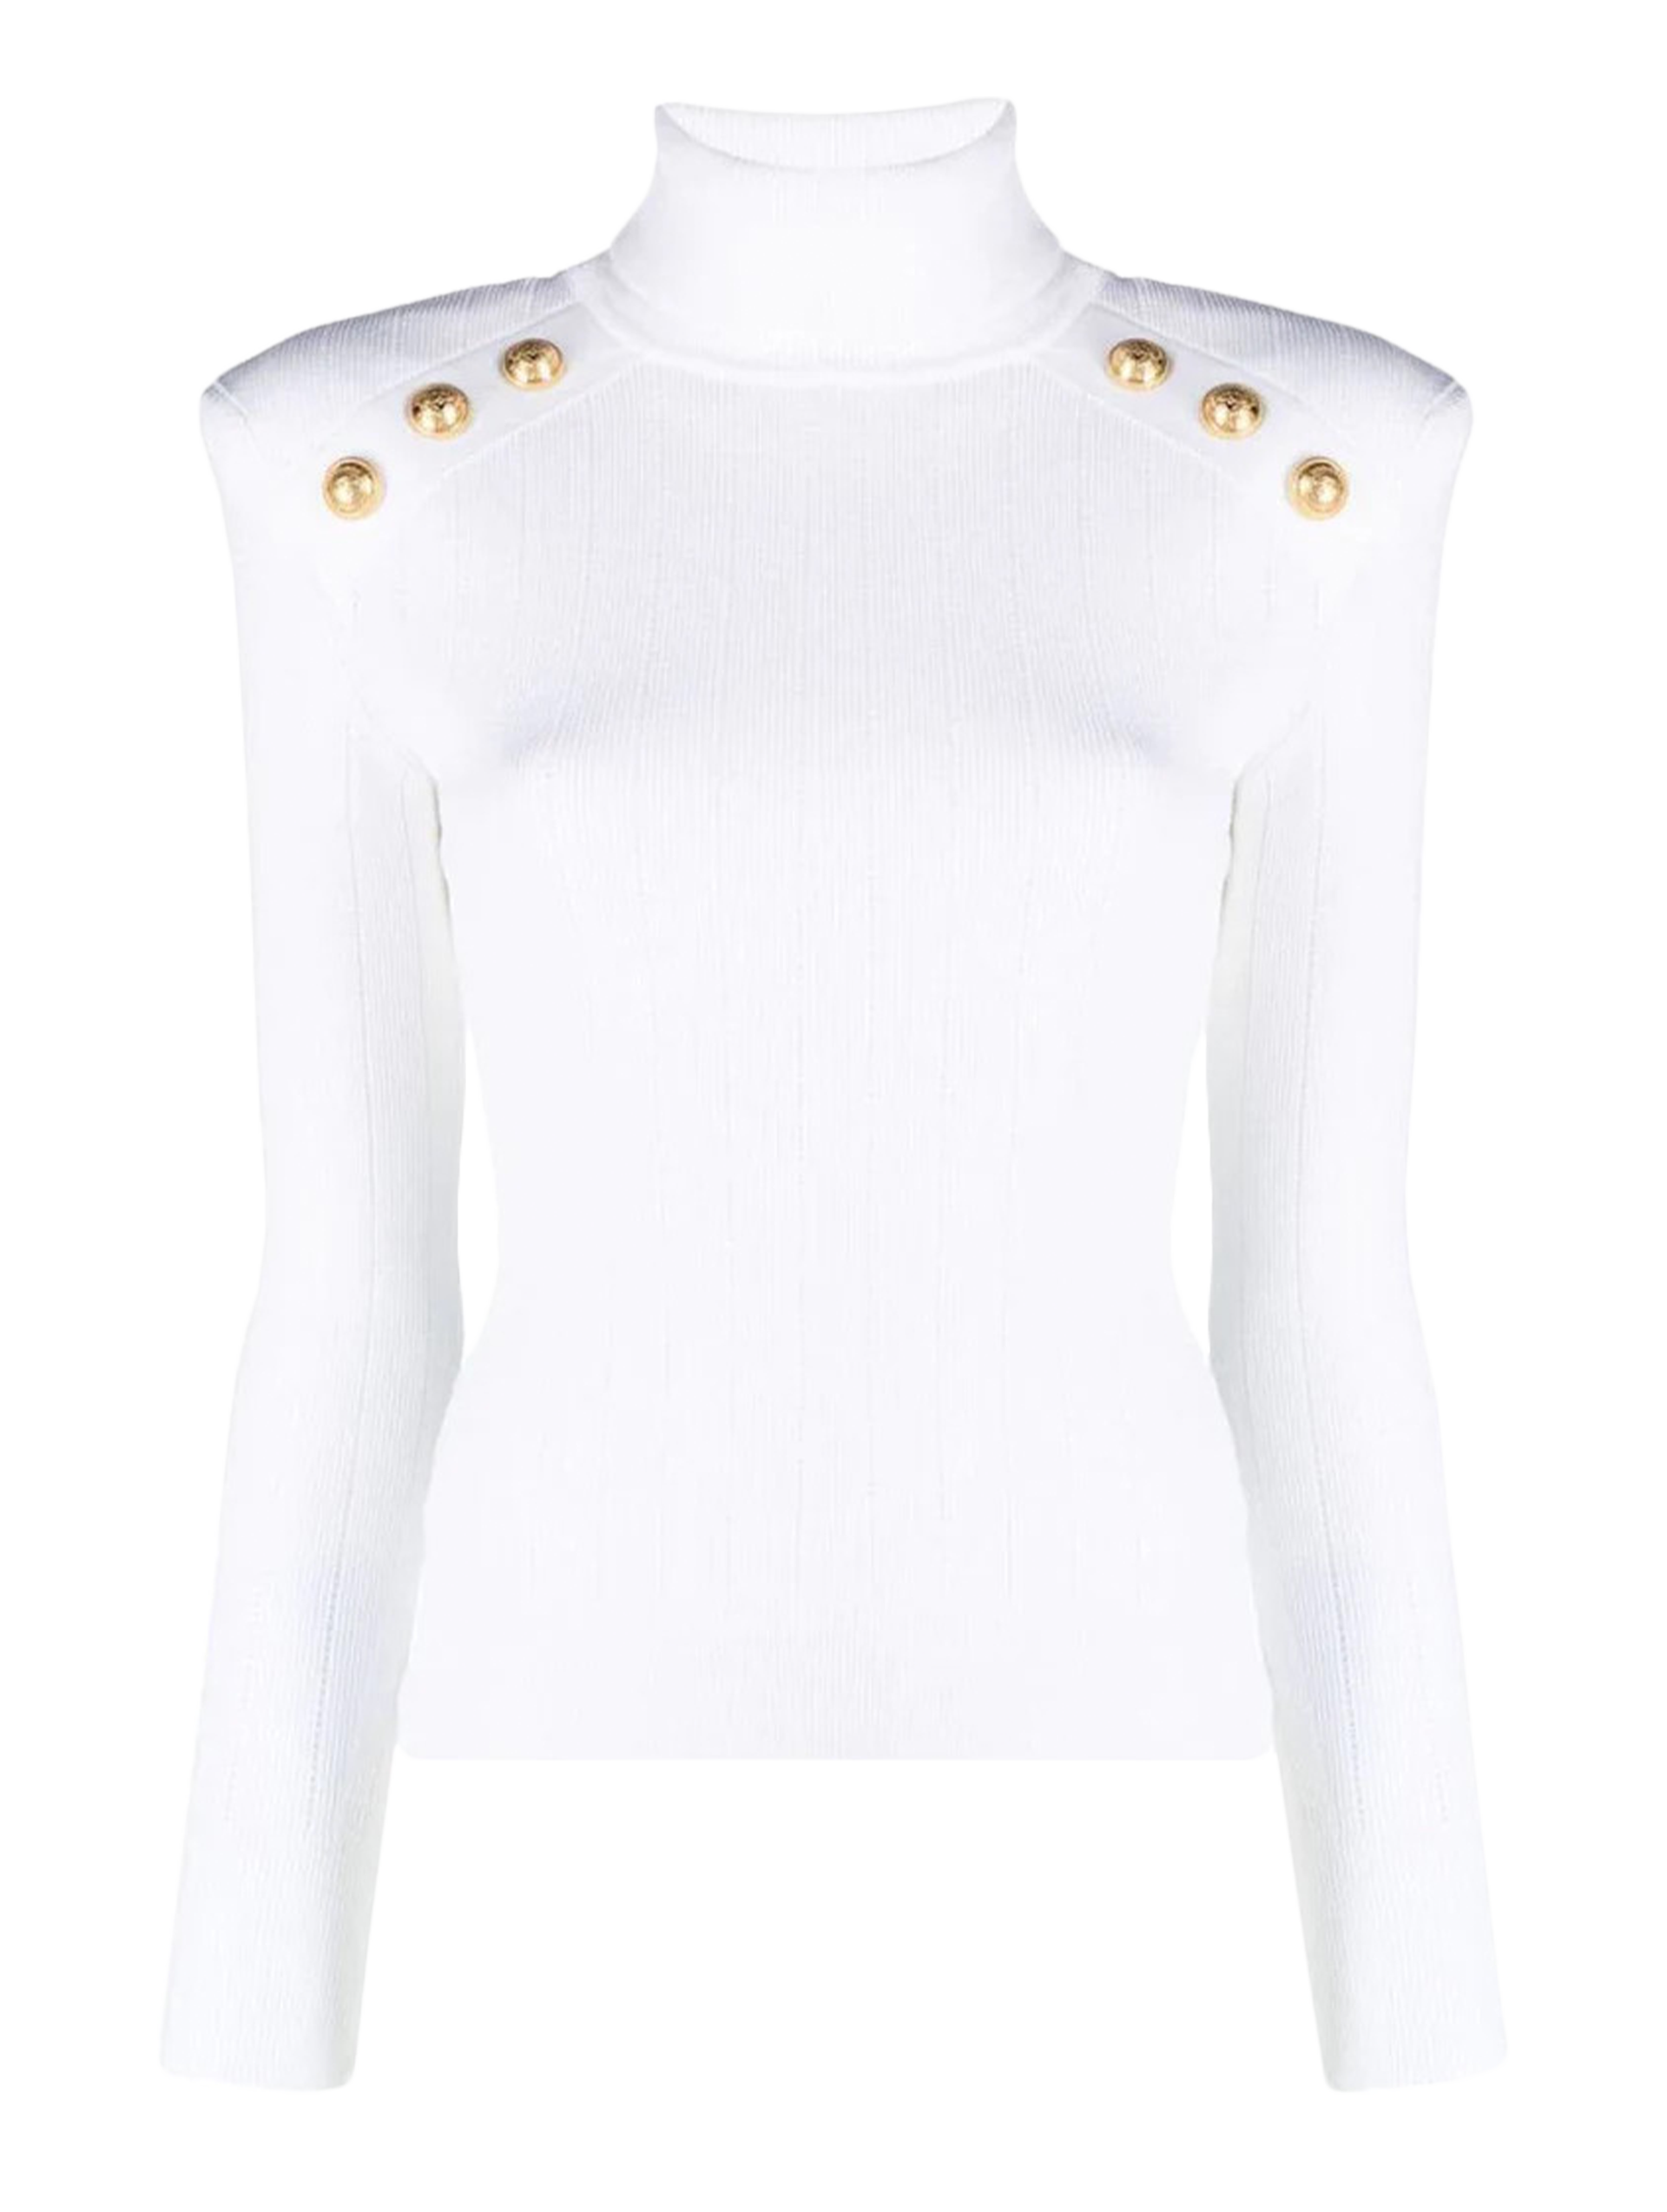 Suéter Gola Alta Branco